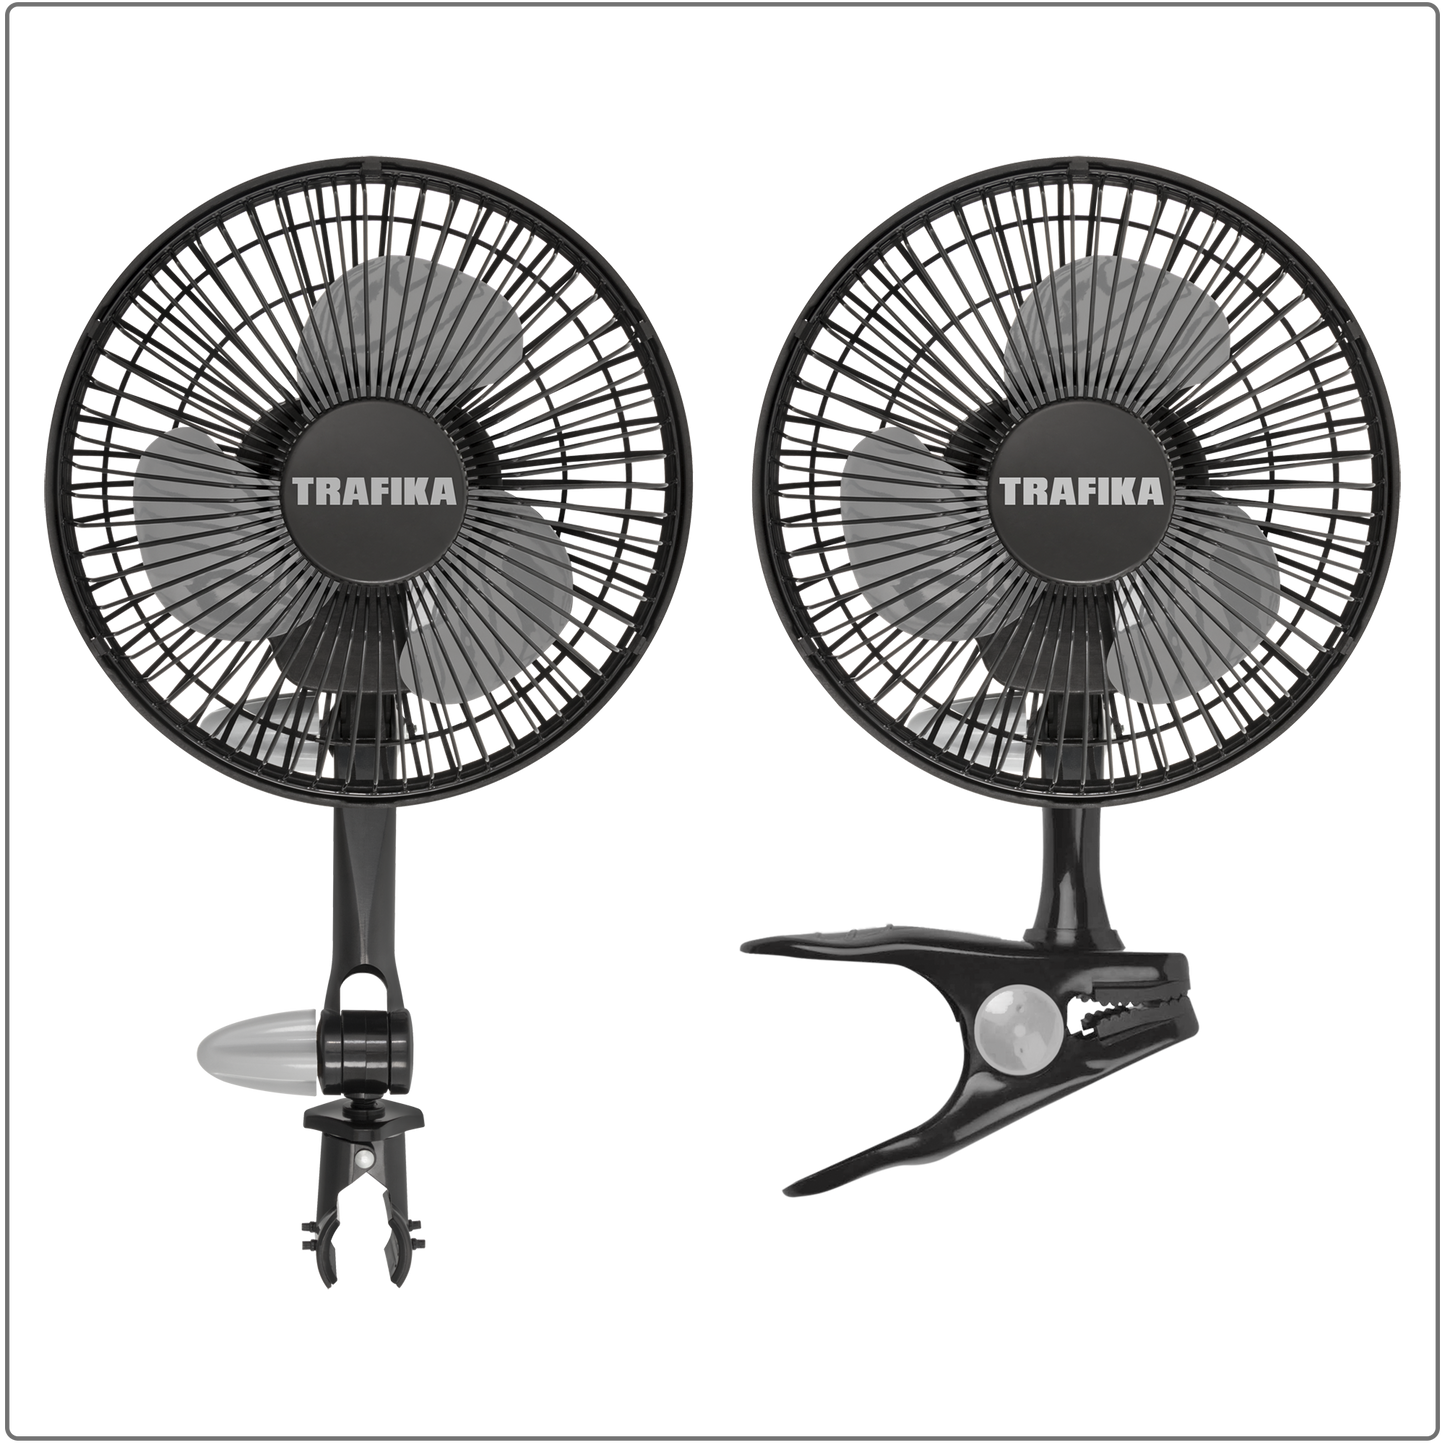 TRAFIKA CLIPFAN | Ventilatore 5W 15CM